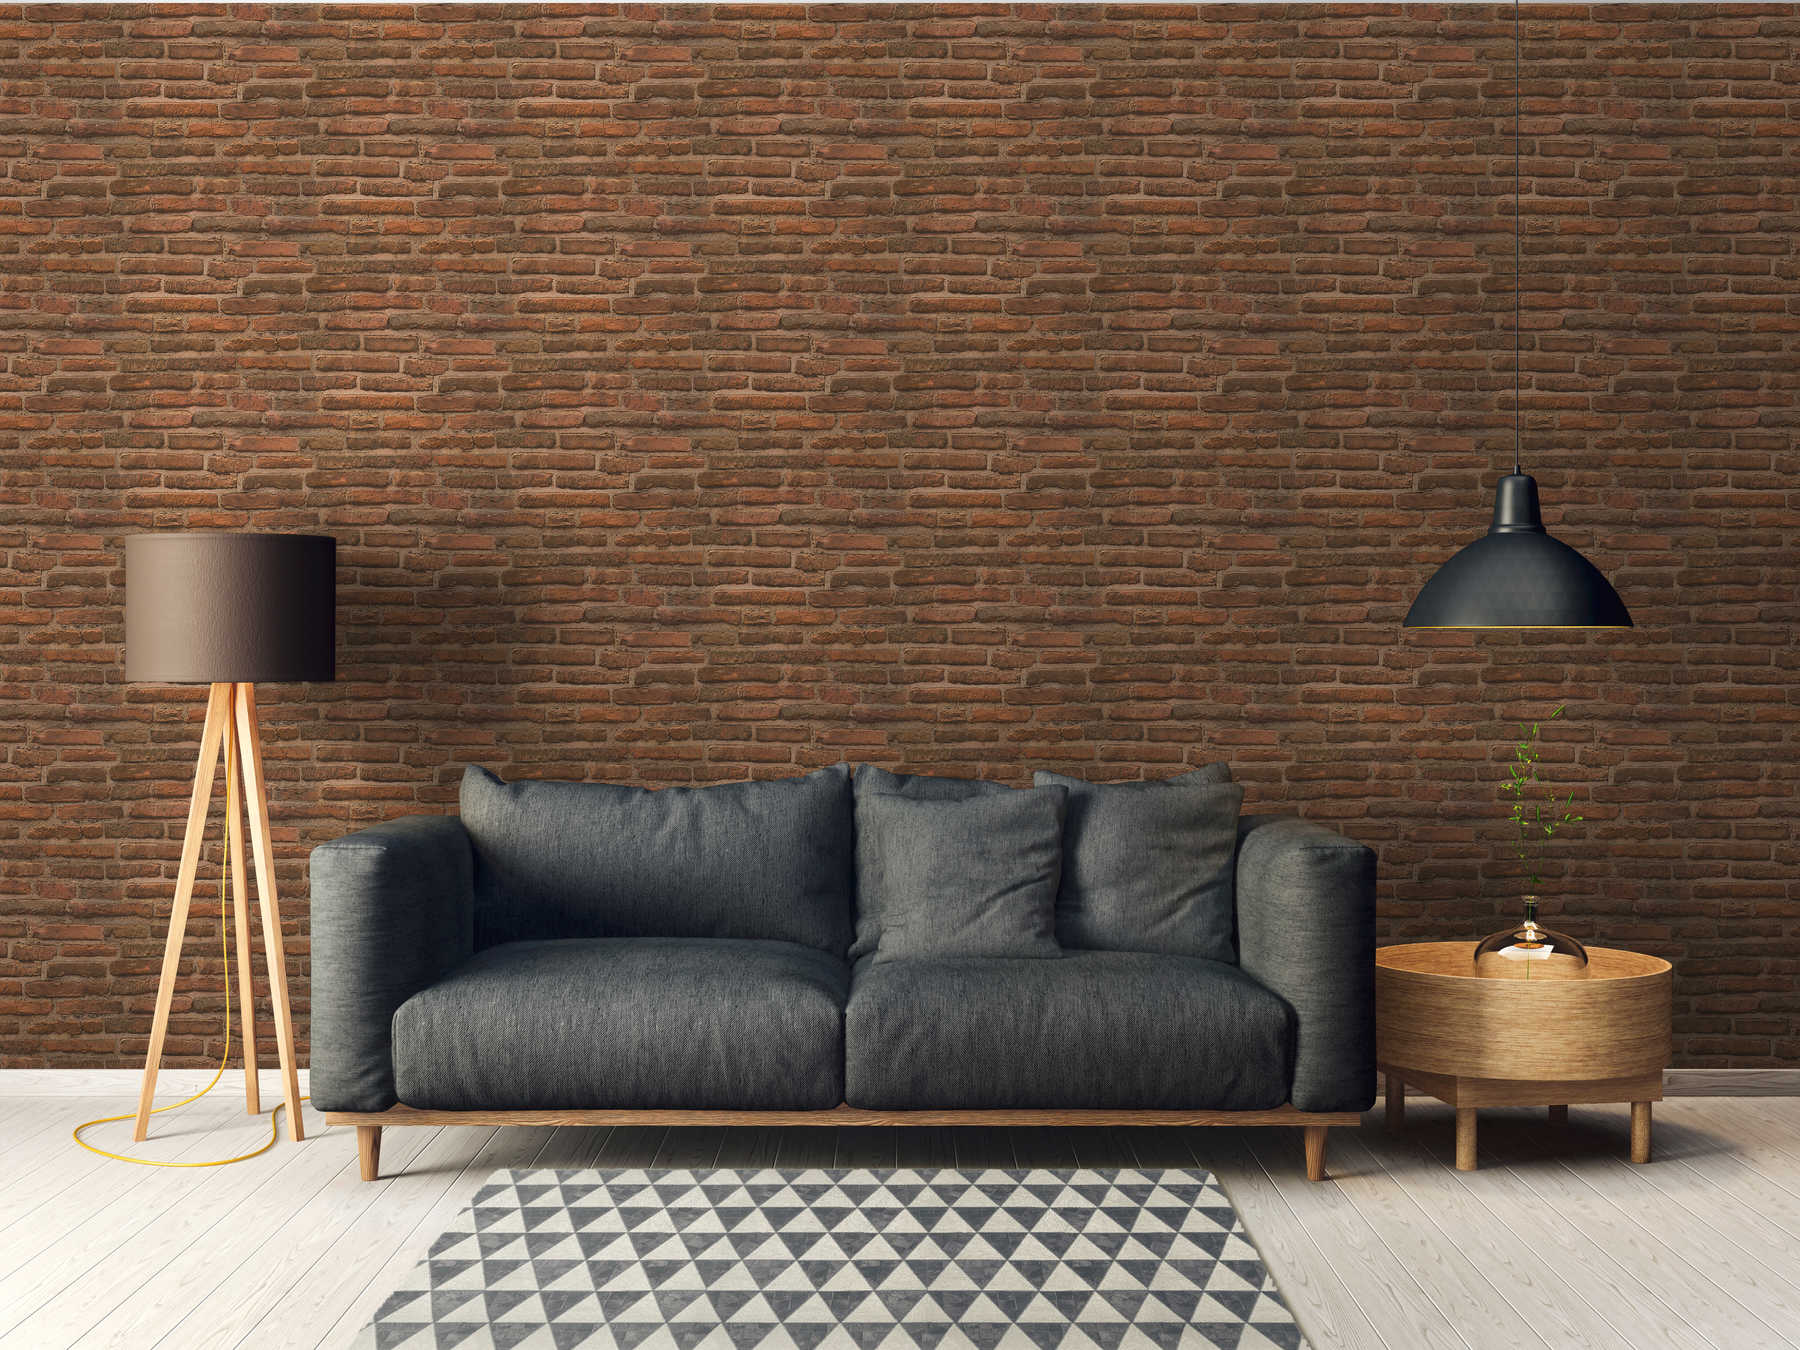             Wallpaper with realistic brick wall motif in 3D look - orange, brown
        